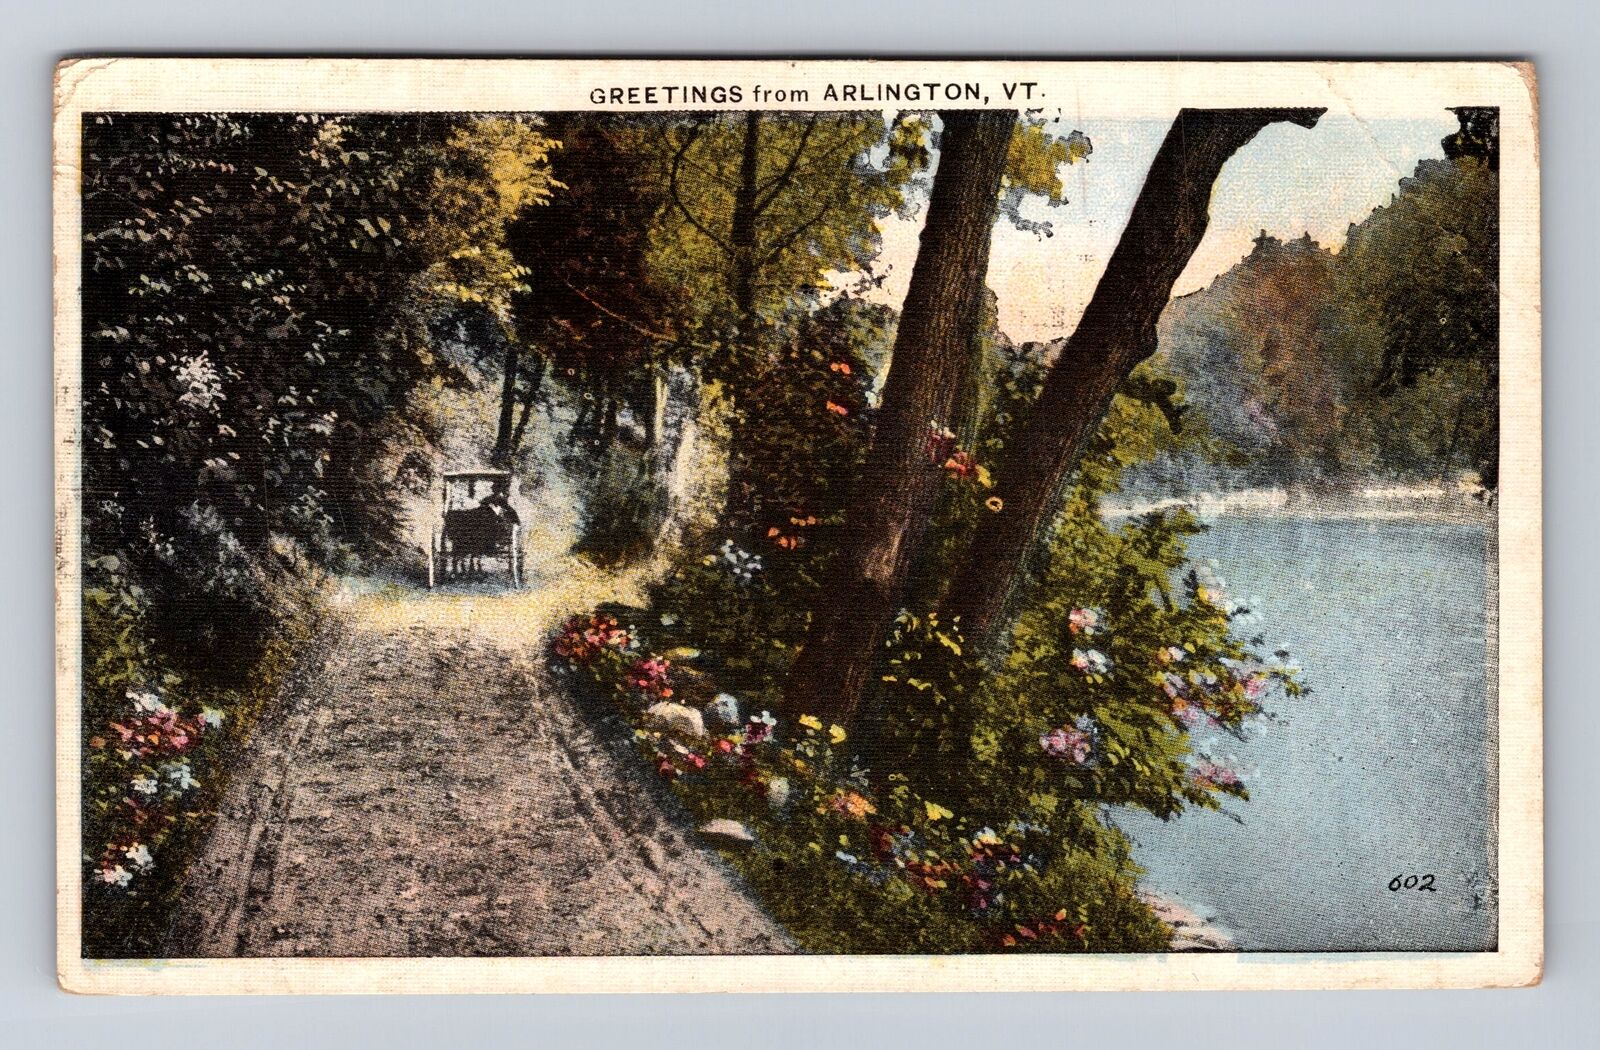 Arlington VT-Vermont, General Greetings, Driving Lake Side, Vintage Postcard